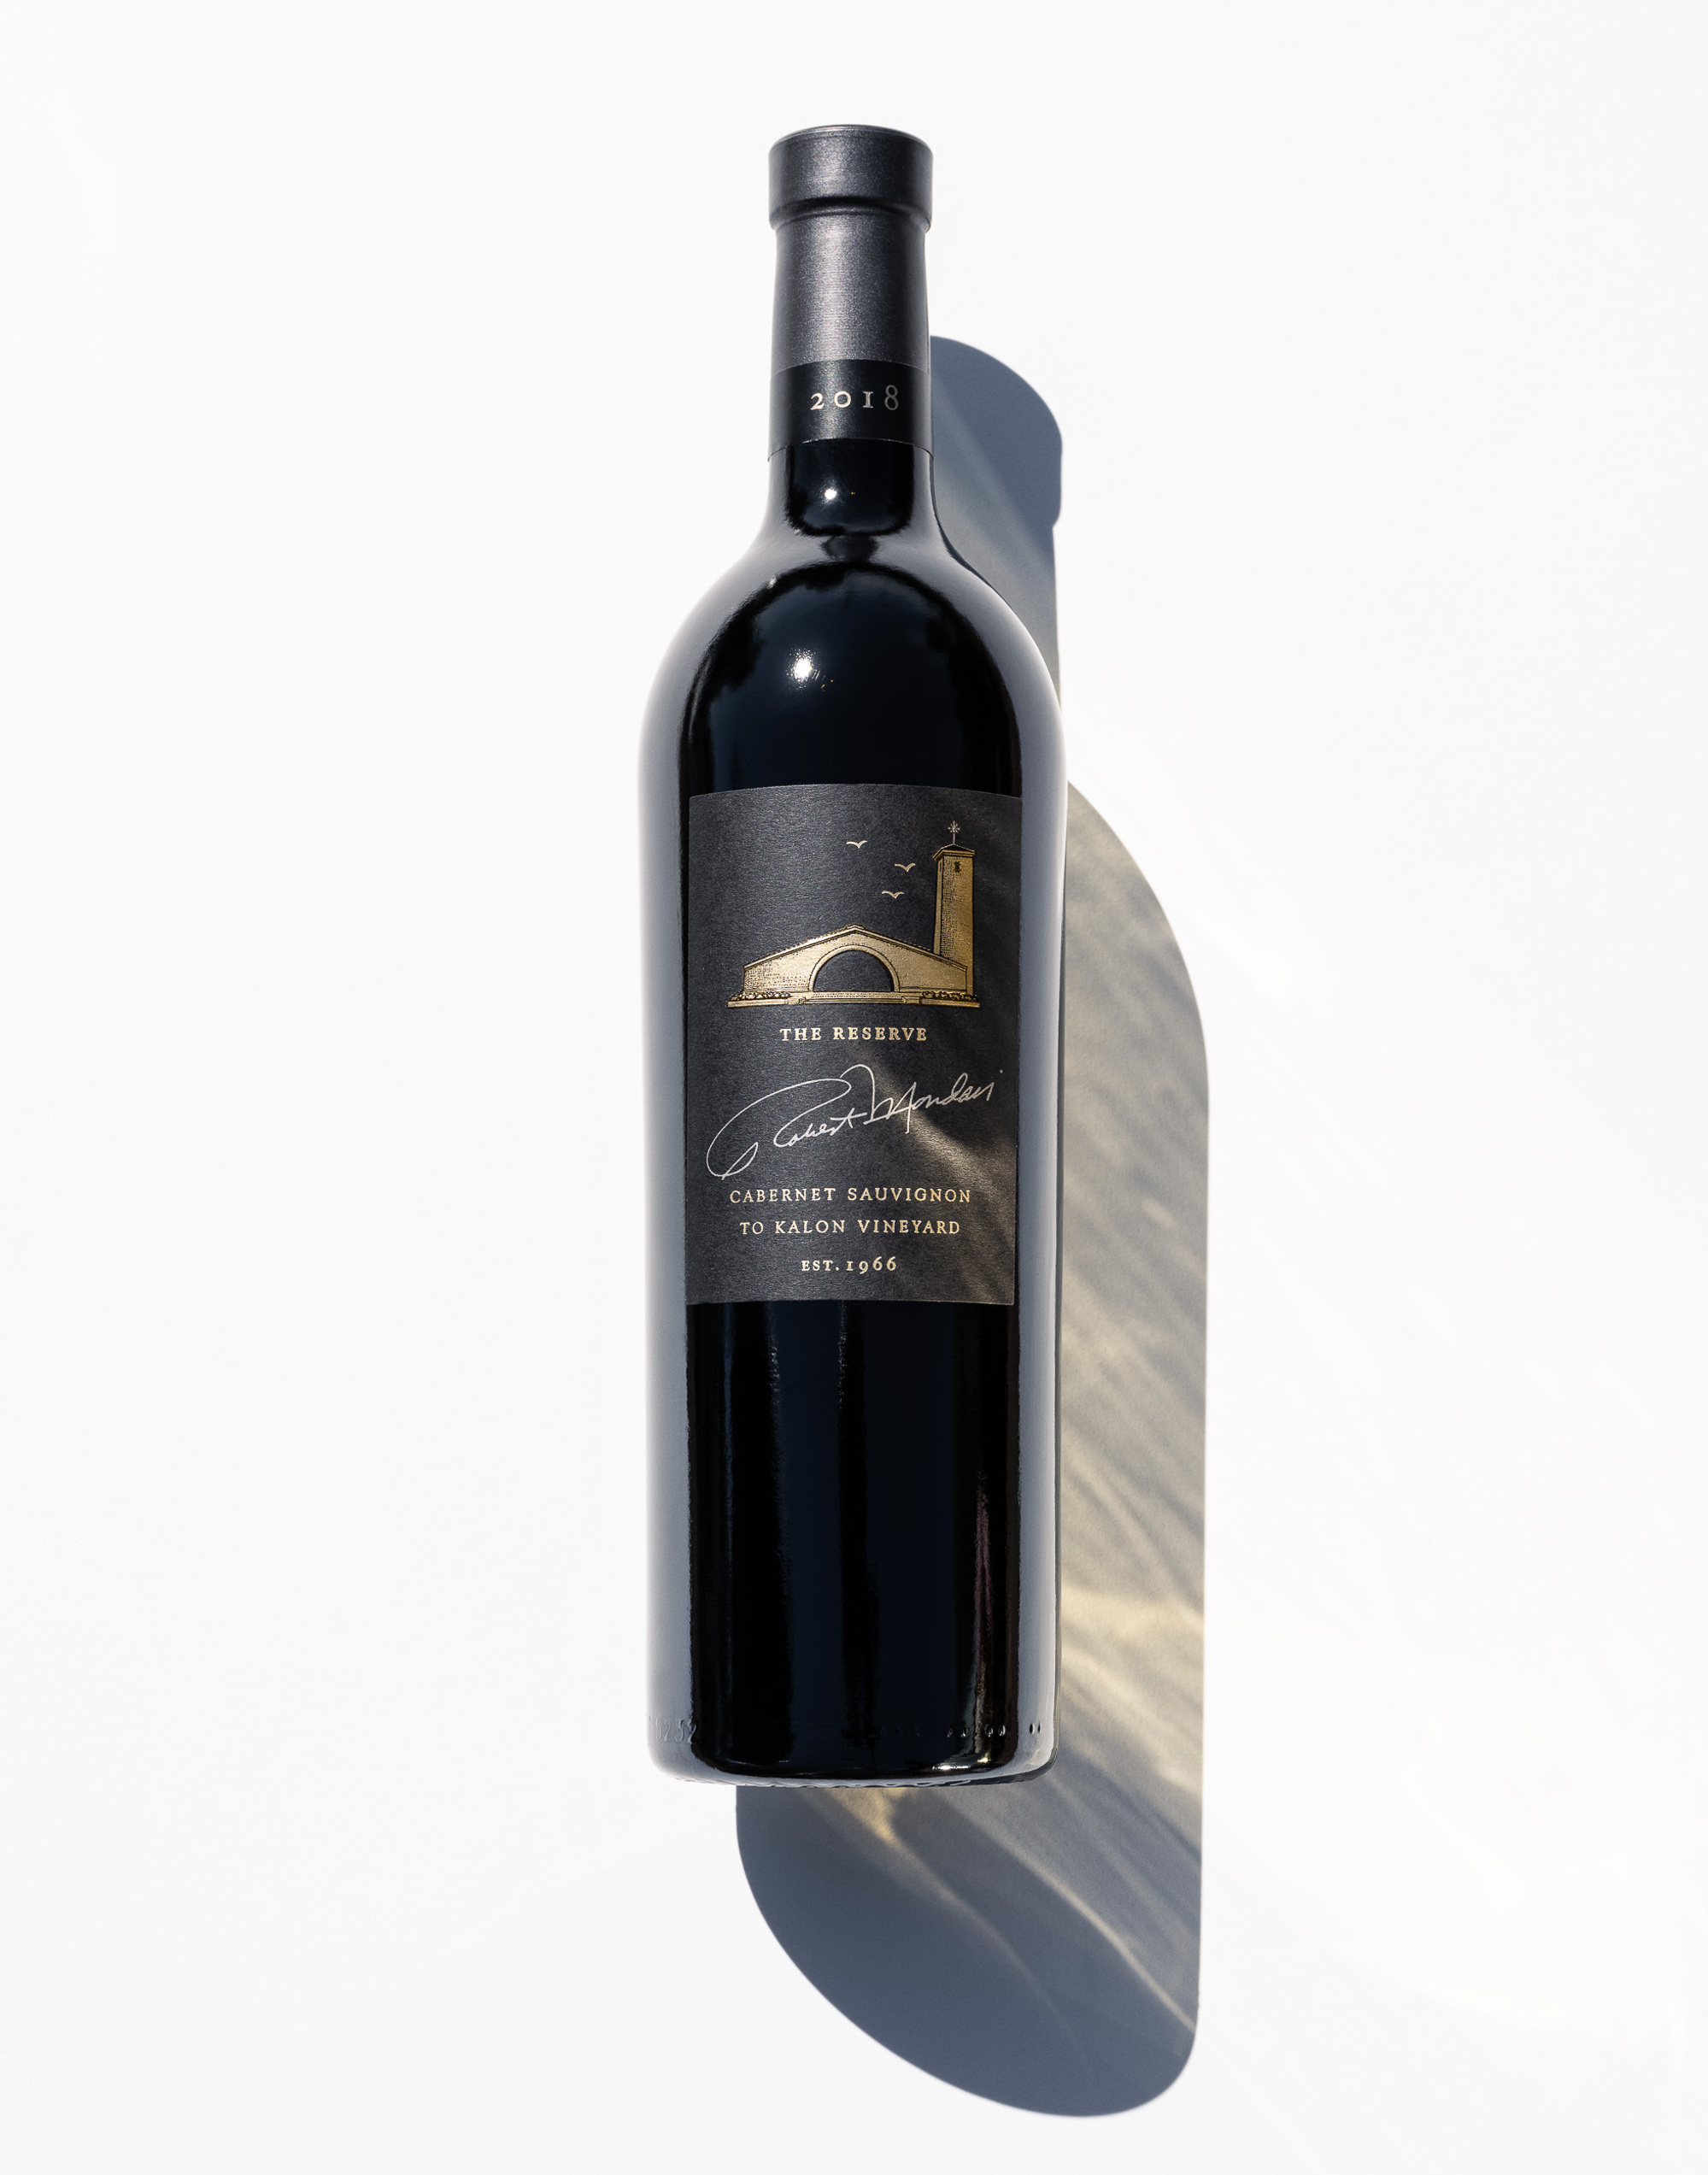 Robert Mondavi Winery wine bottle photography by Timothy Hogan Studio in Los Angeles